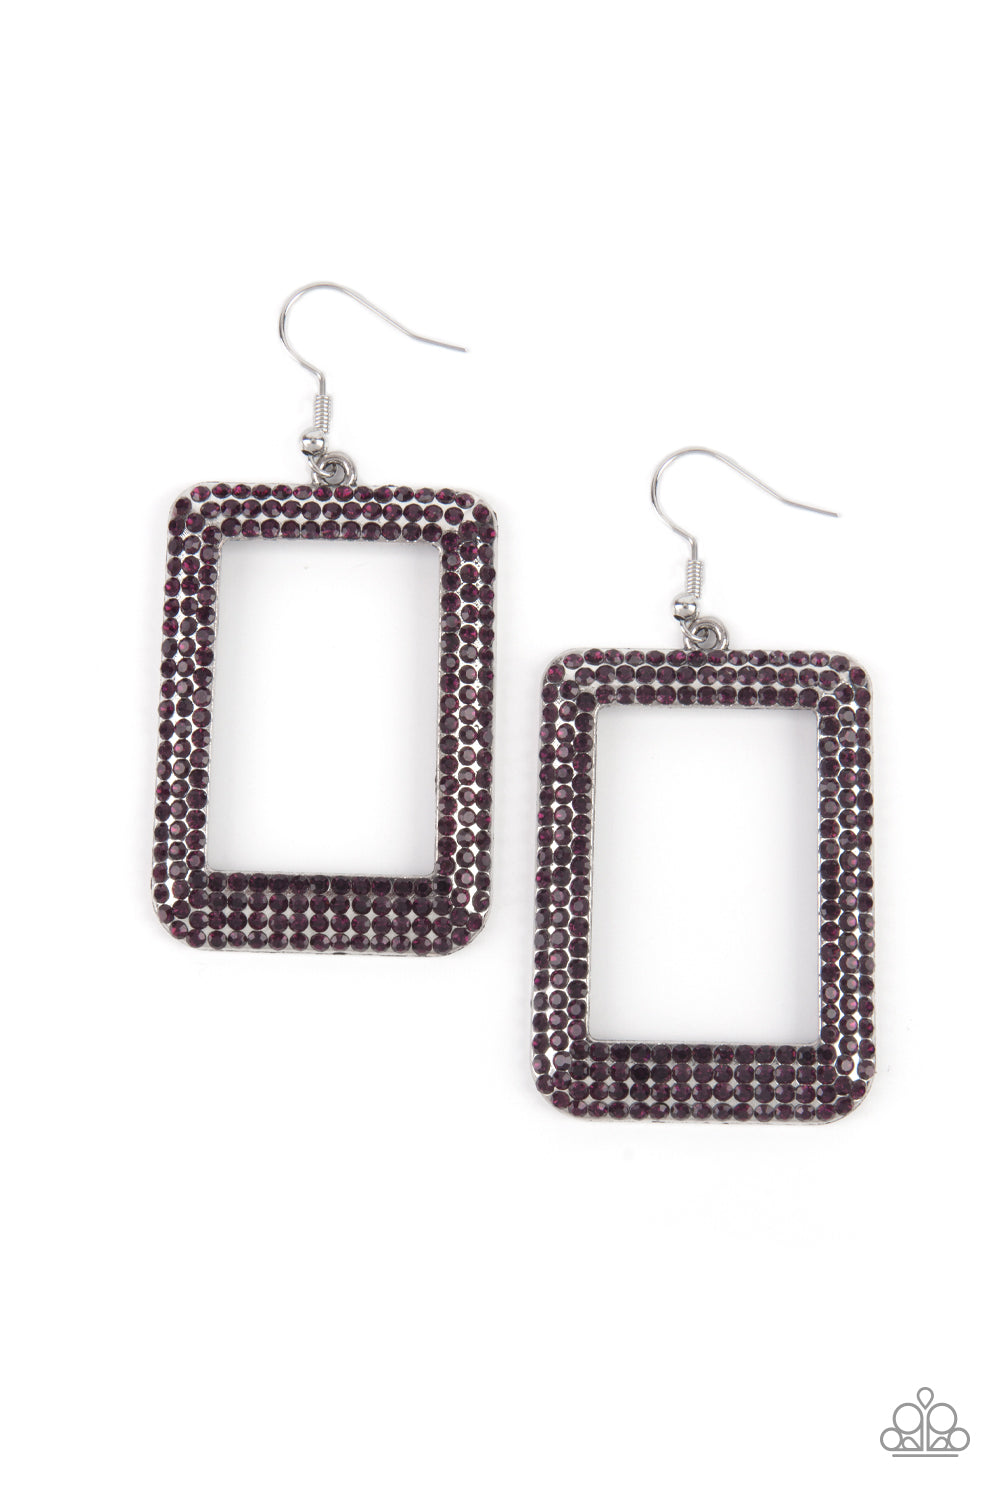 Paparazzi Accessories - World FRAME-ous #E511 - Purple Earrings